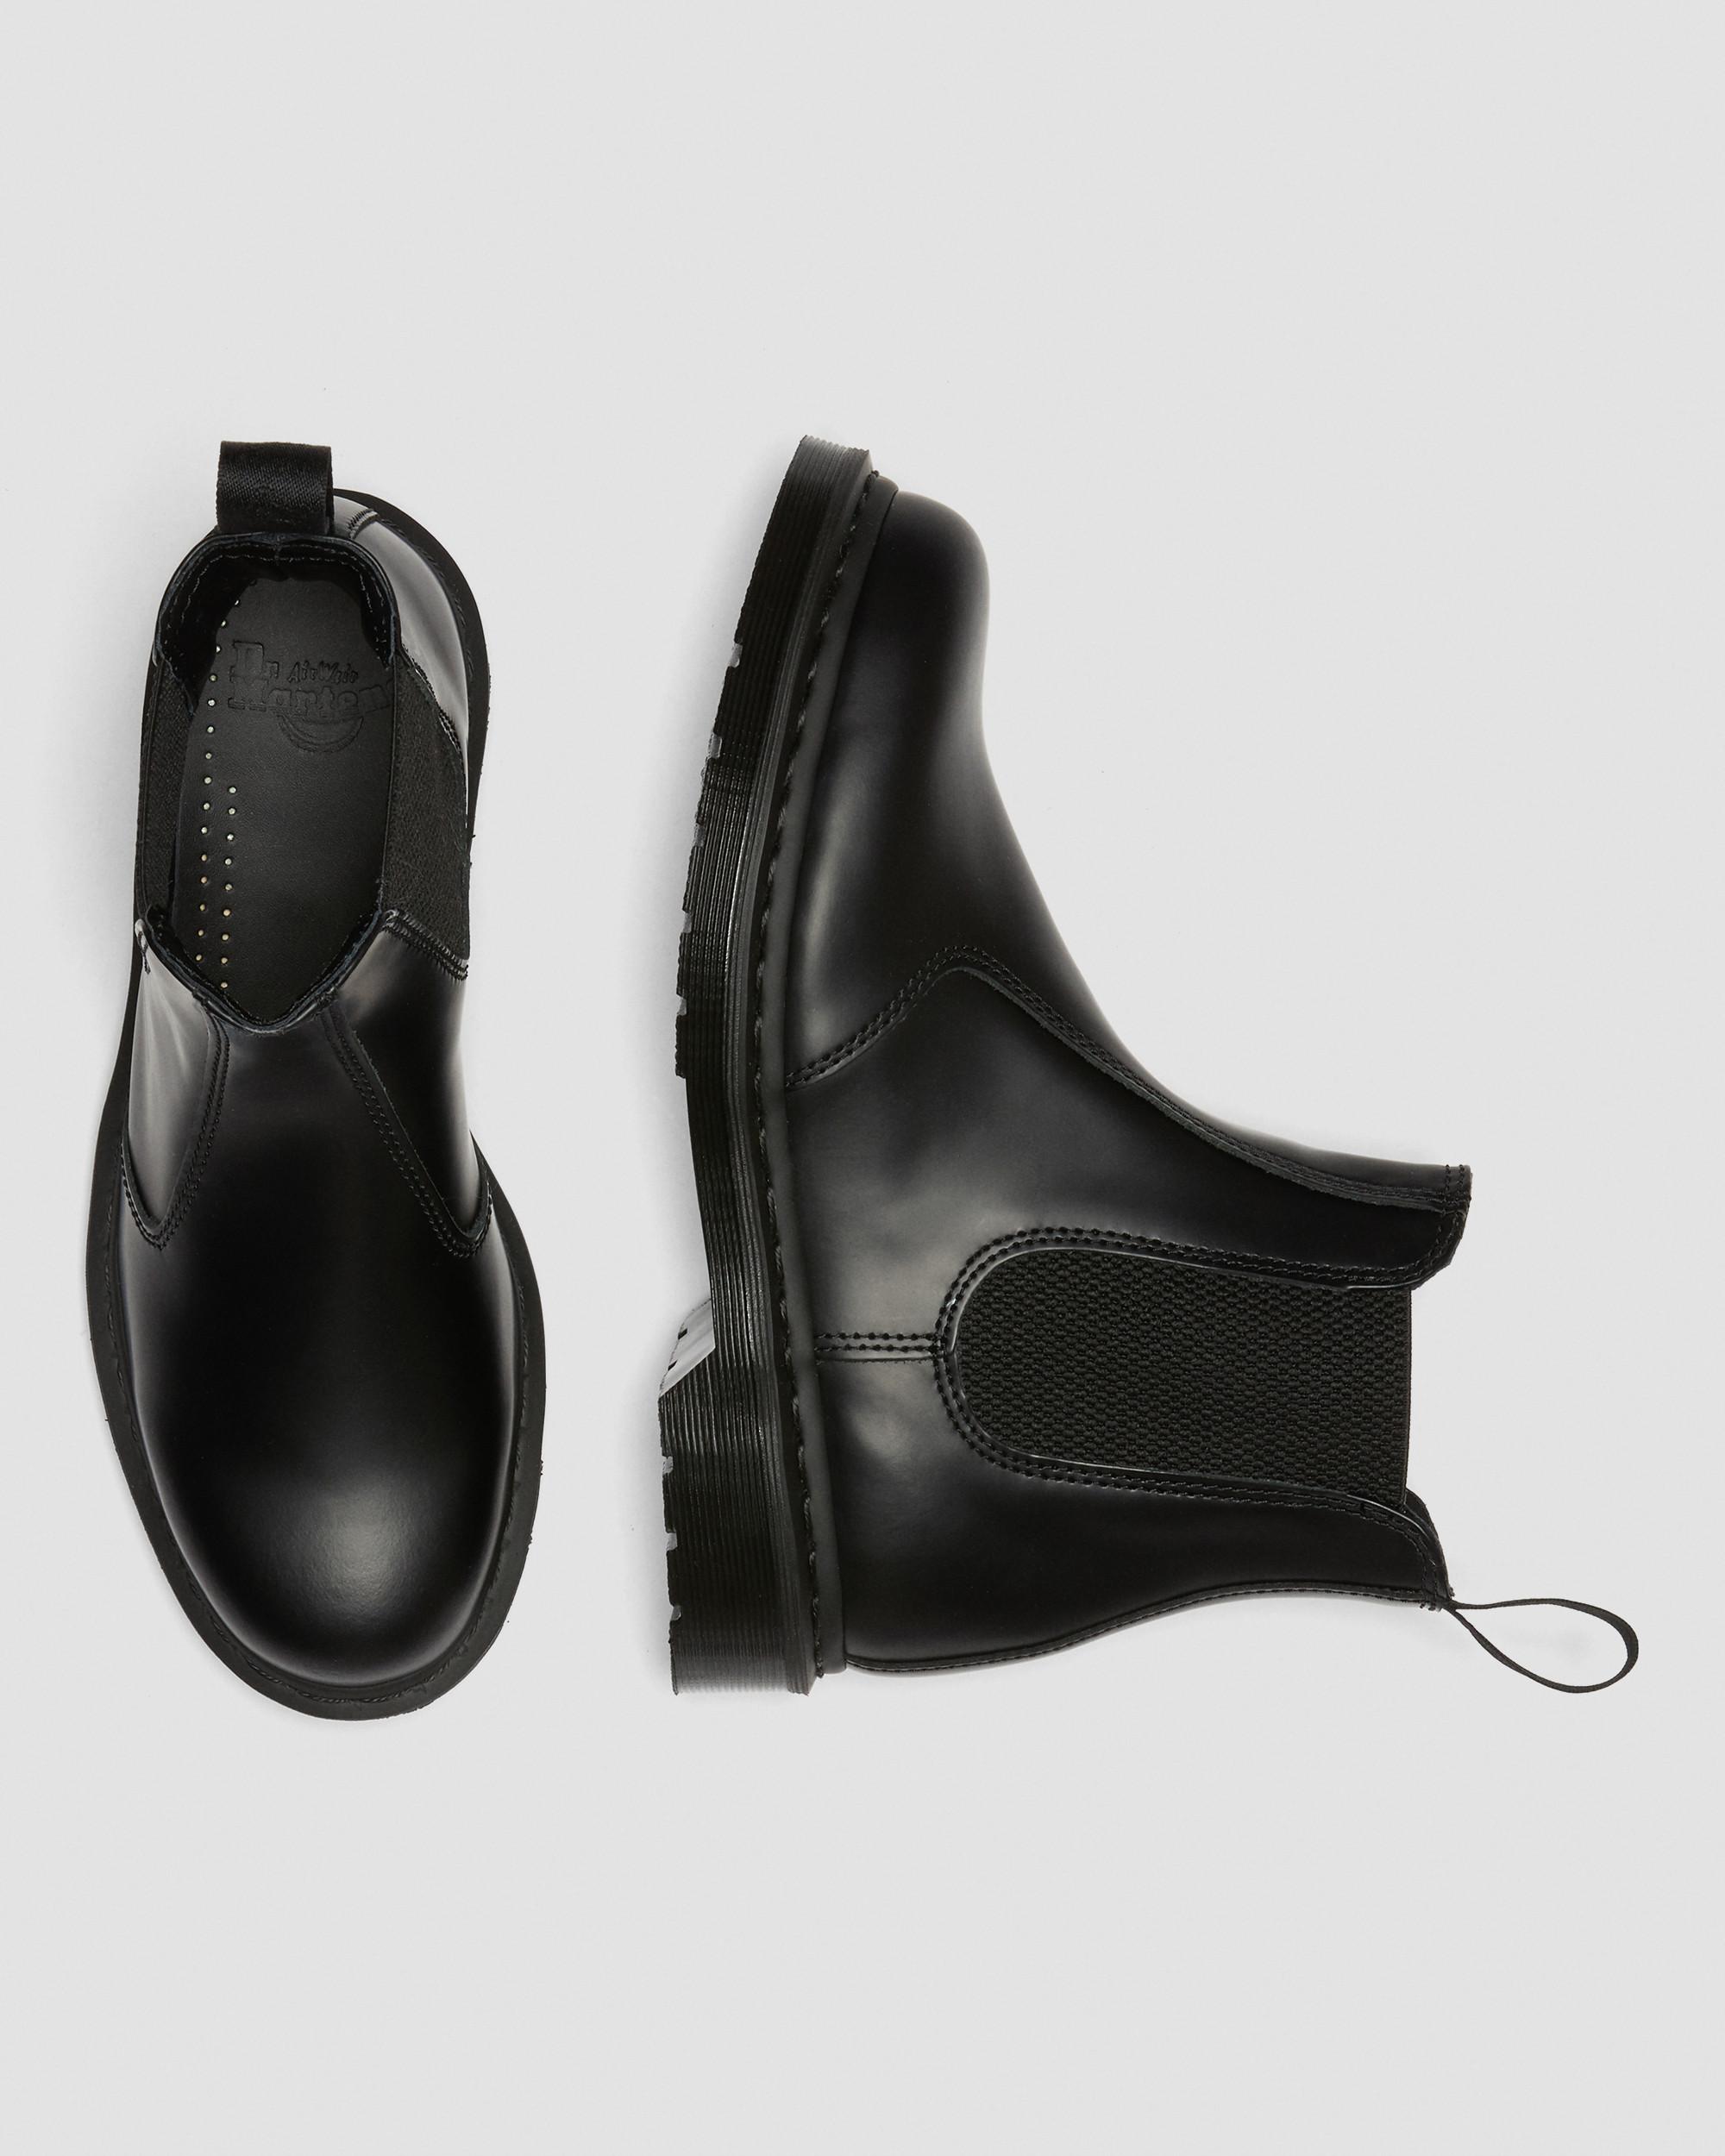 Dr. Martens mod. 2976 beatles mono black smooth – La Griffe calzature